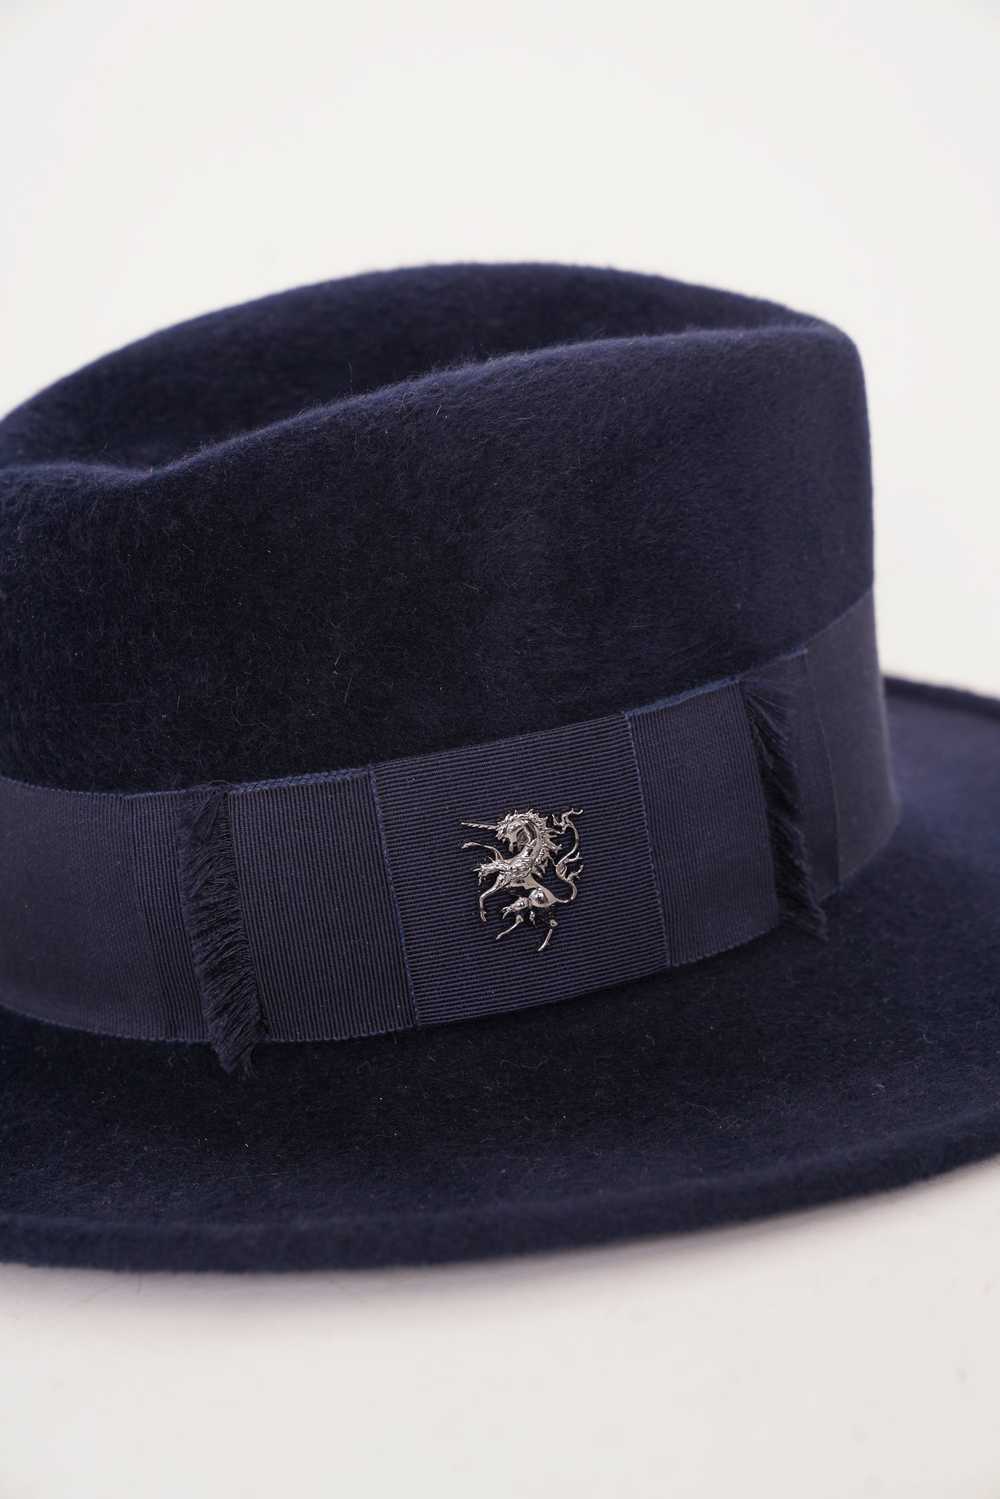 Philip Treacy Navy Wool Felt Bucket Hat - image 5